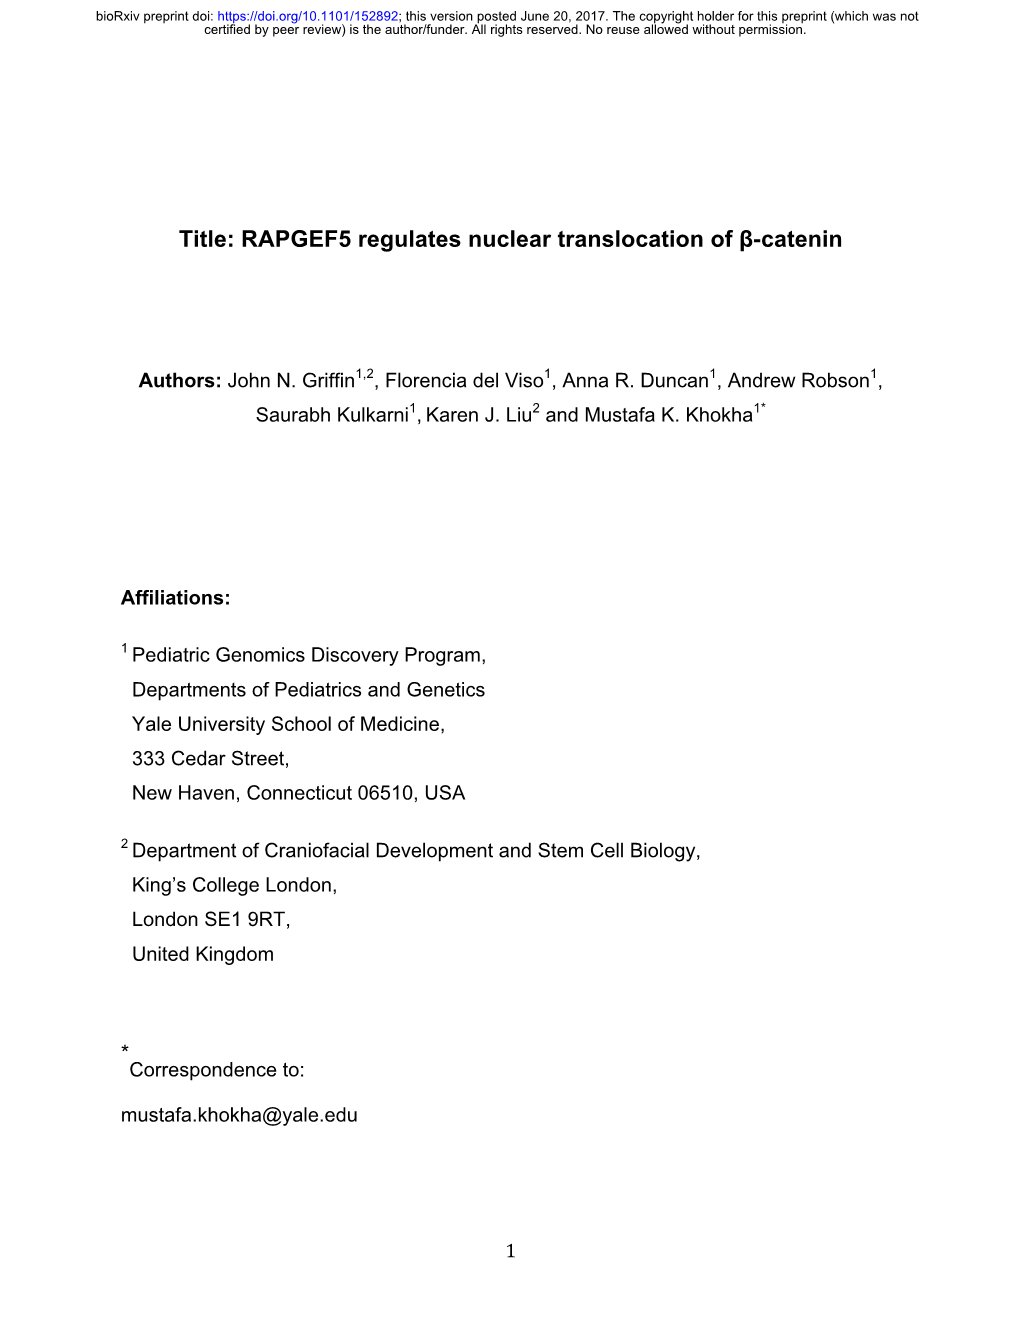 RAPGEF5 Regulates Nuclear Translocation of Β-Catenin